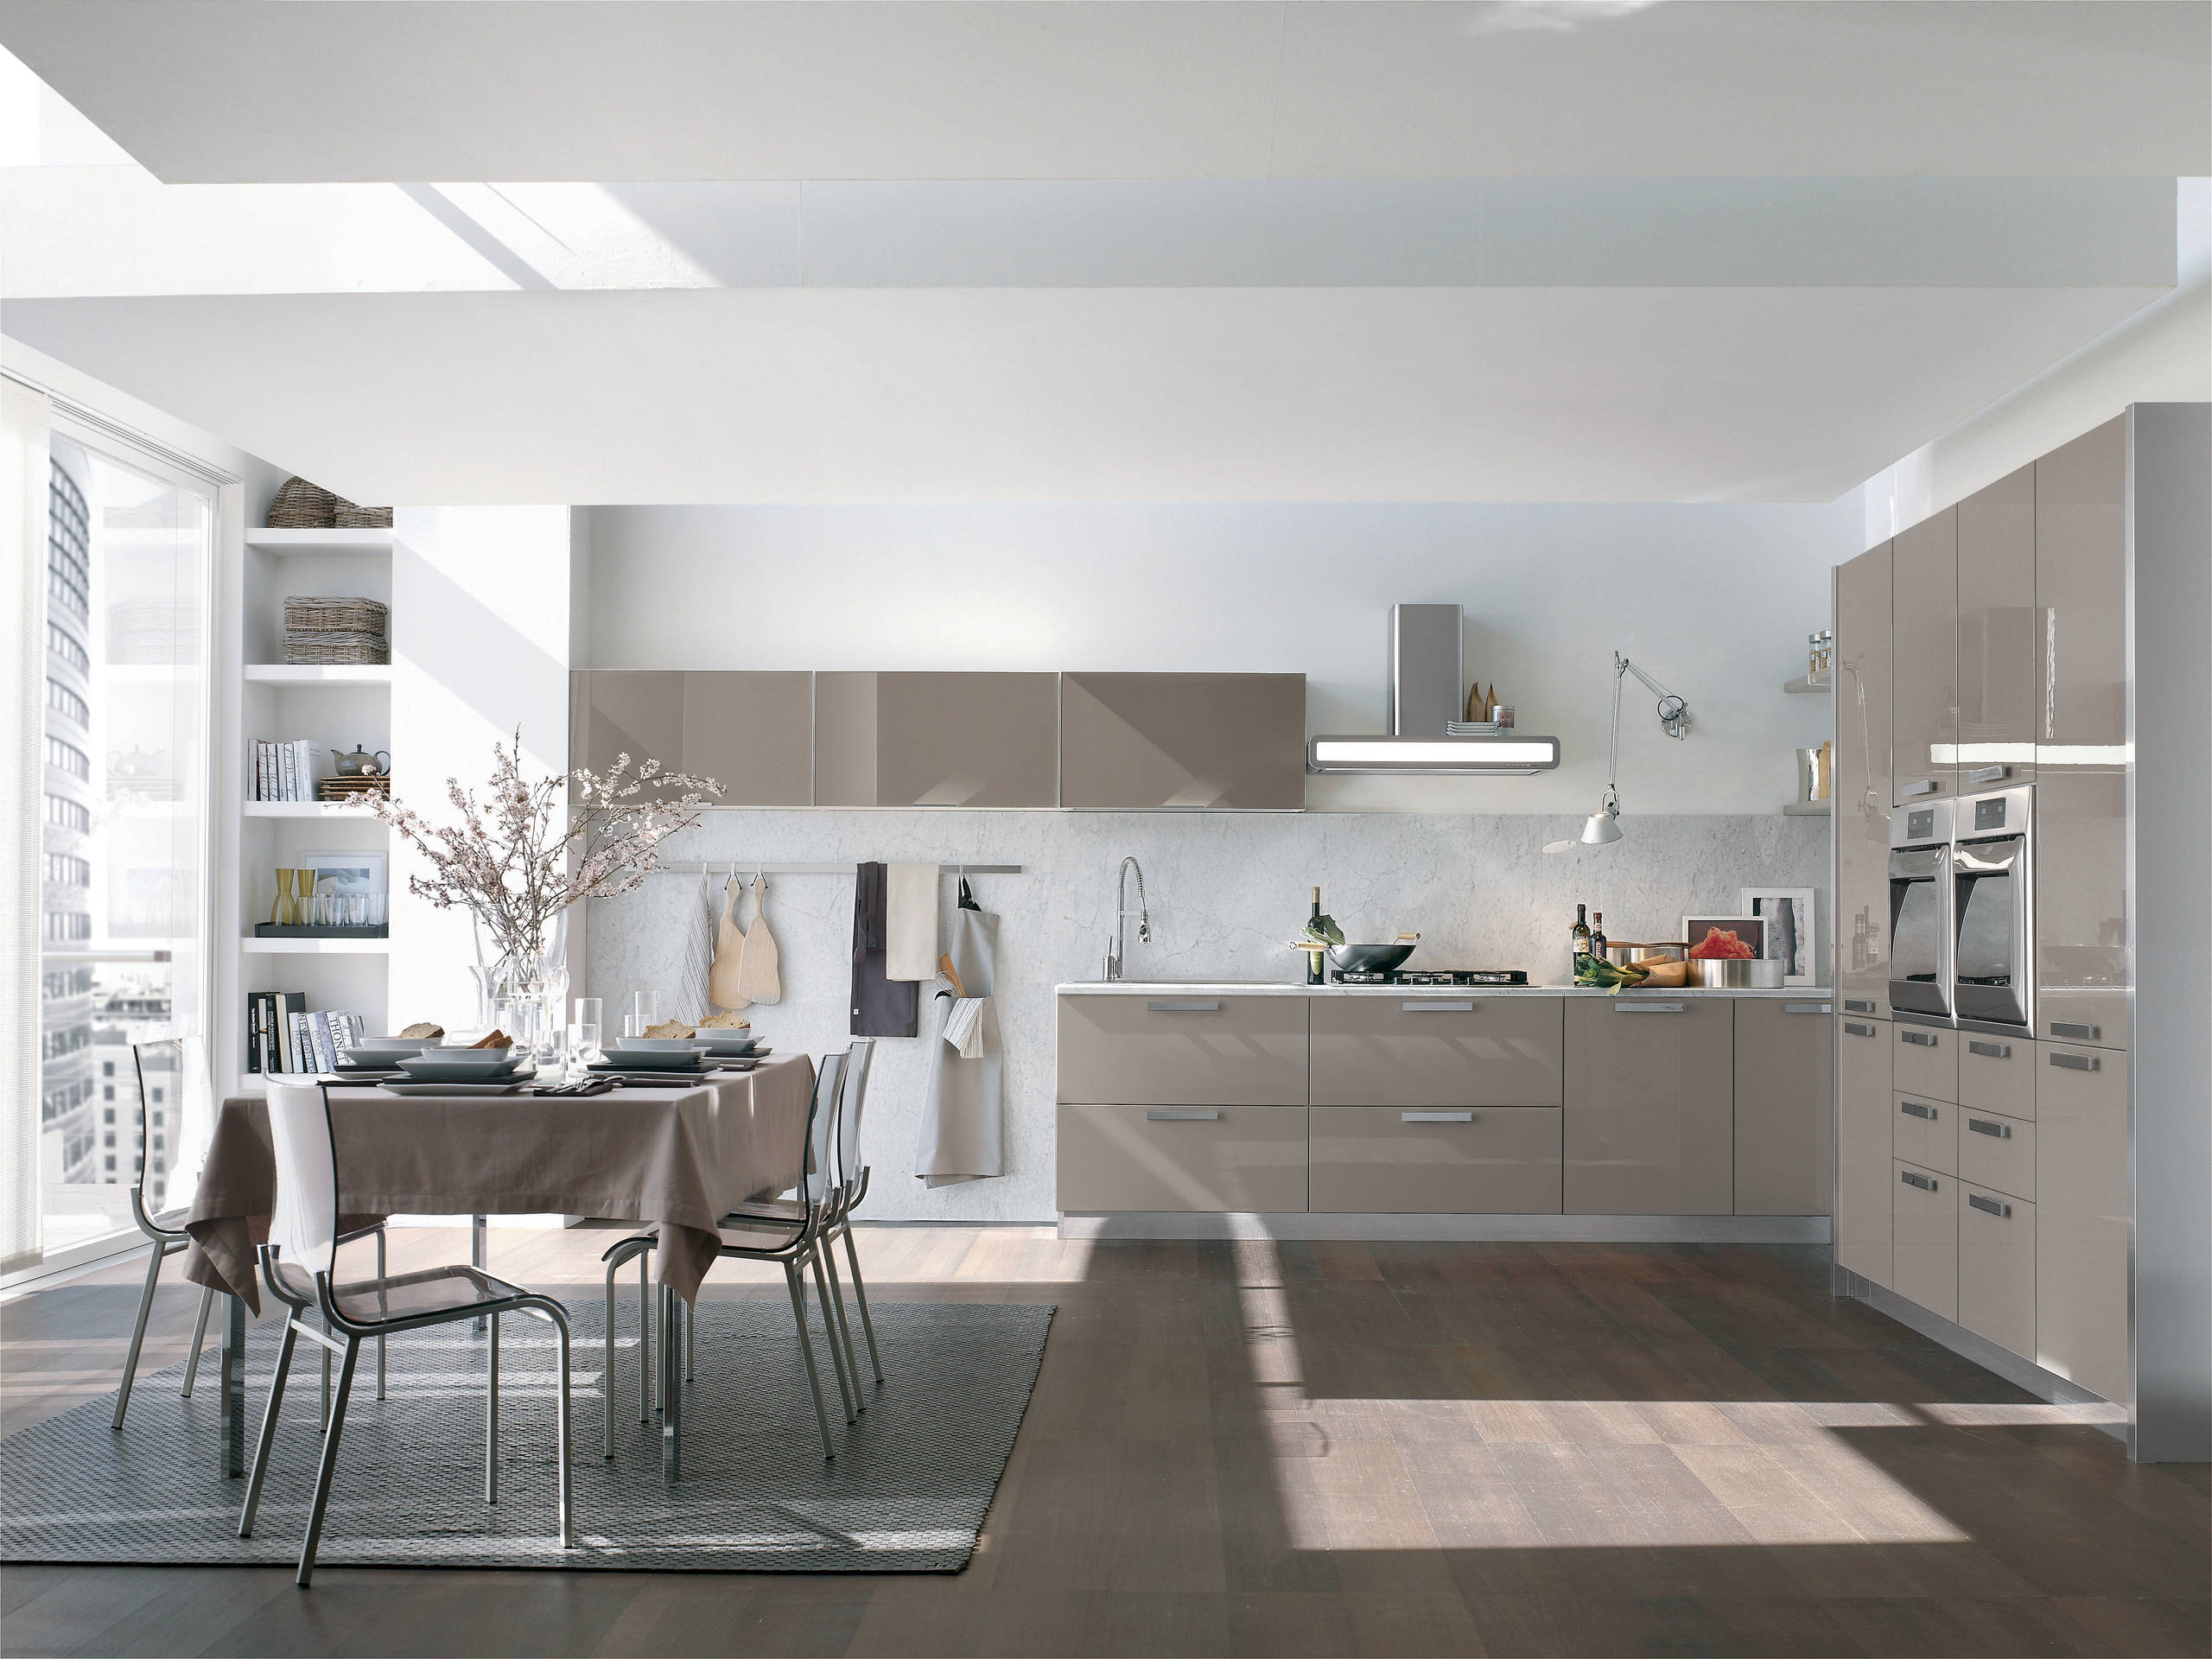 Luxury Italian Kitchen Designs for Modern Homes